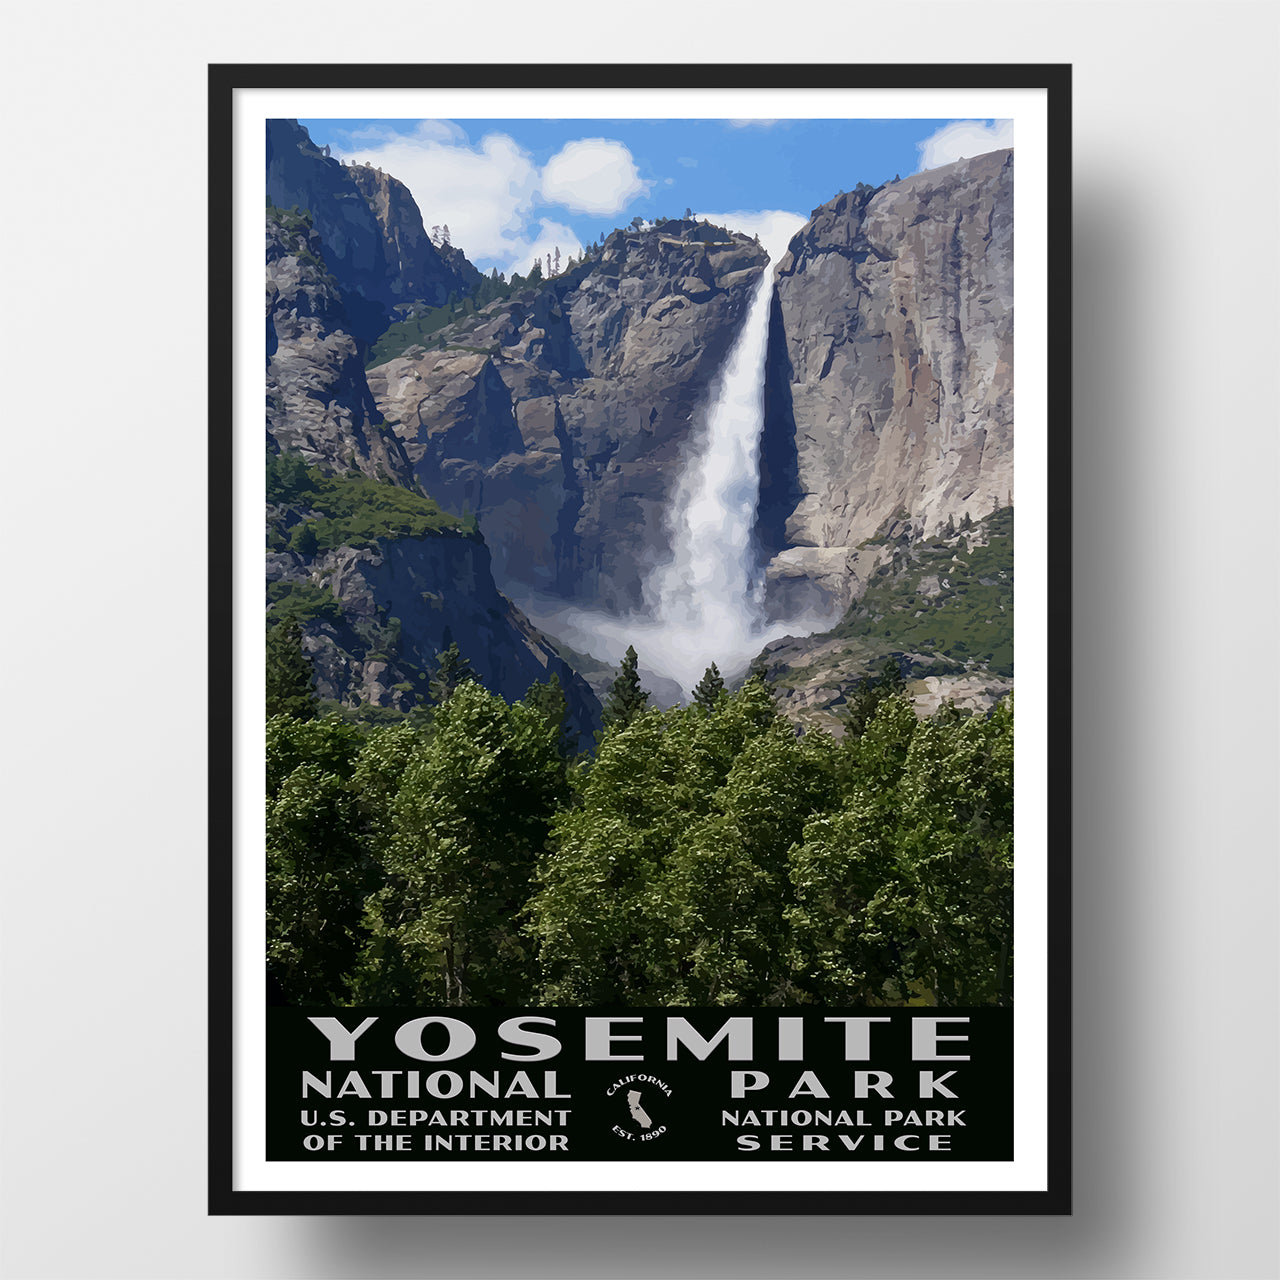 Yosemite falls national park poster, wpa style